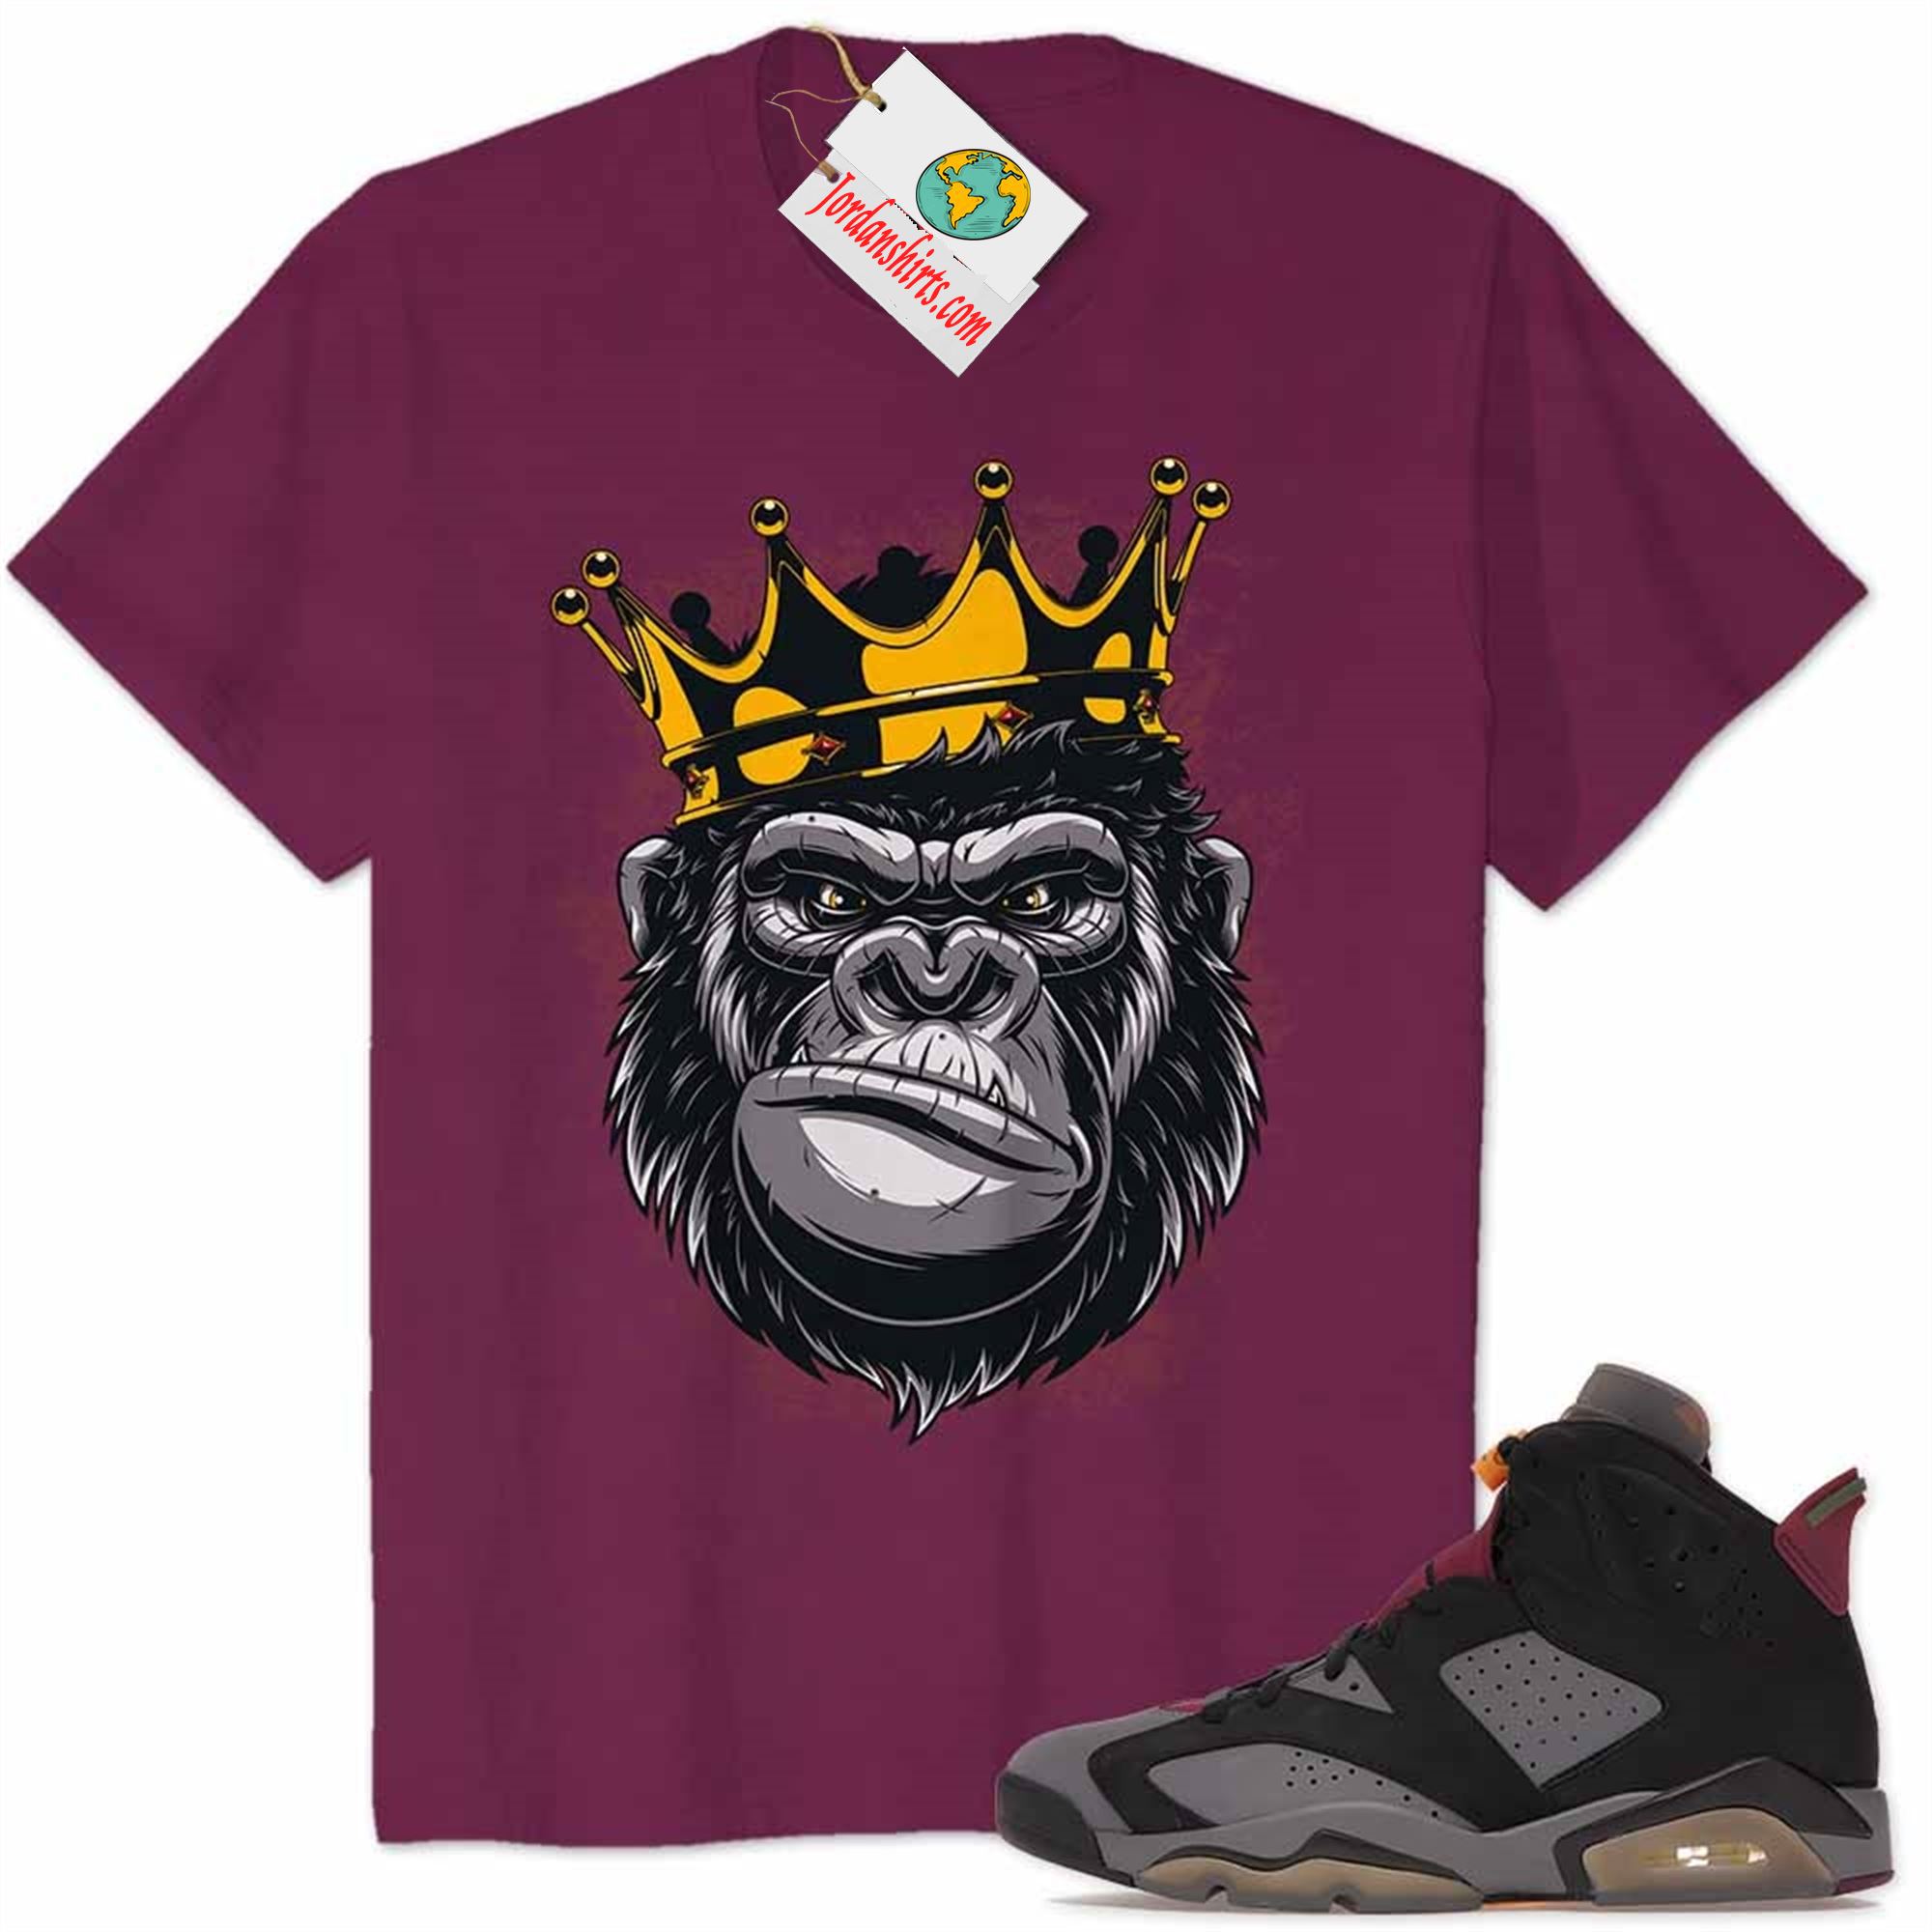 Jordan 6 Shirt, The Gorilla King With Crown Maroon Air Jordan 6 Bordeaux 6s Plus Size Up To 5xl